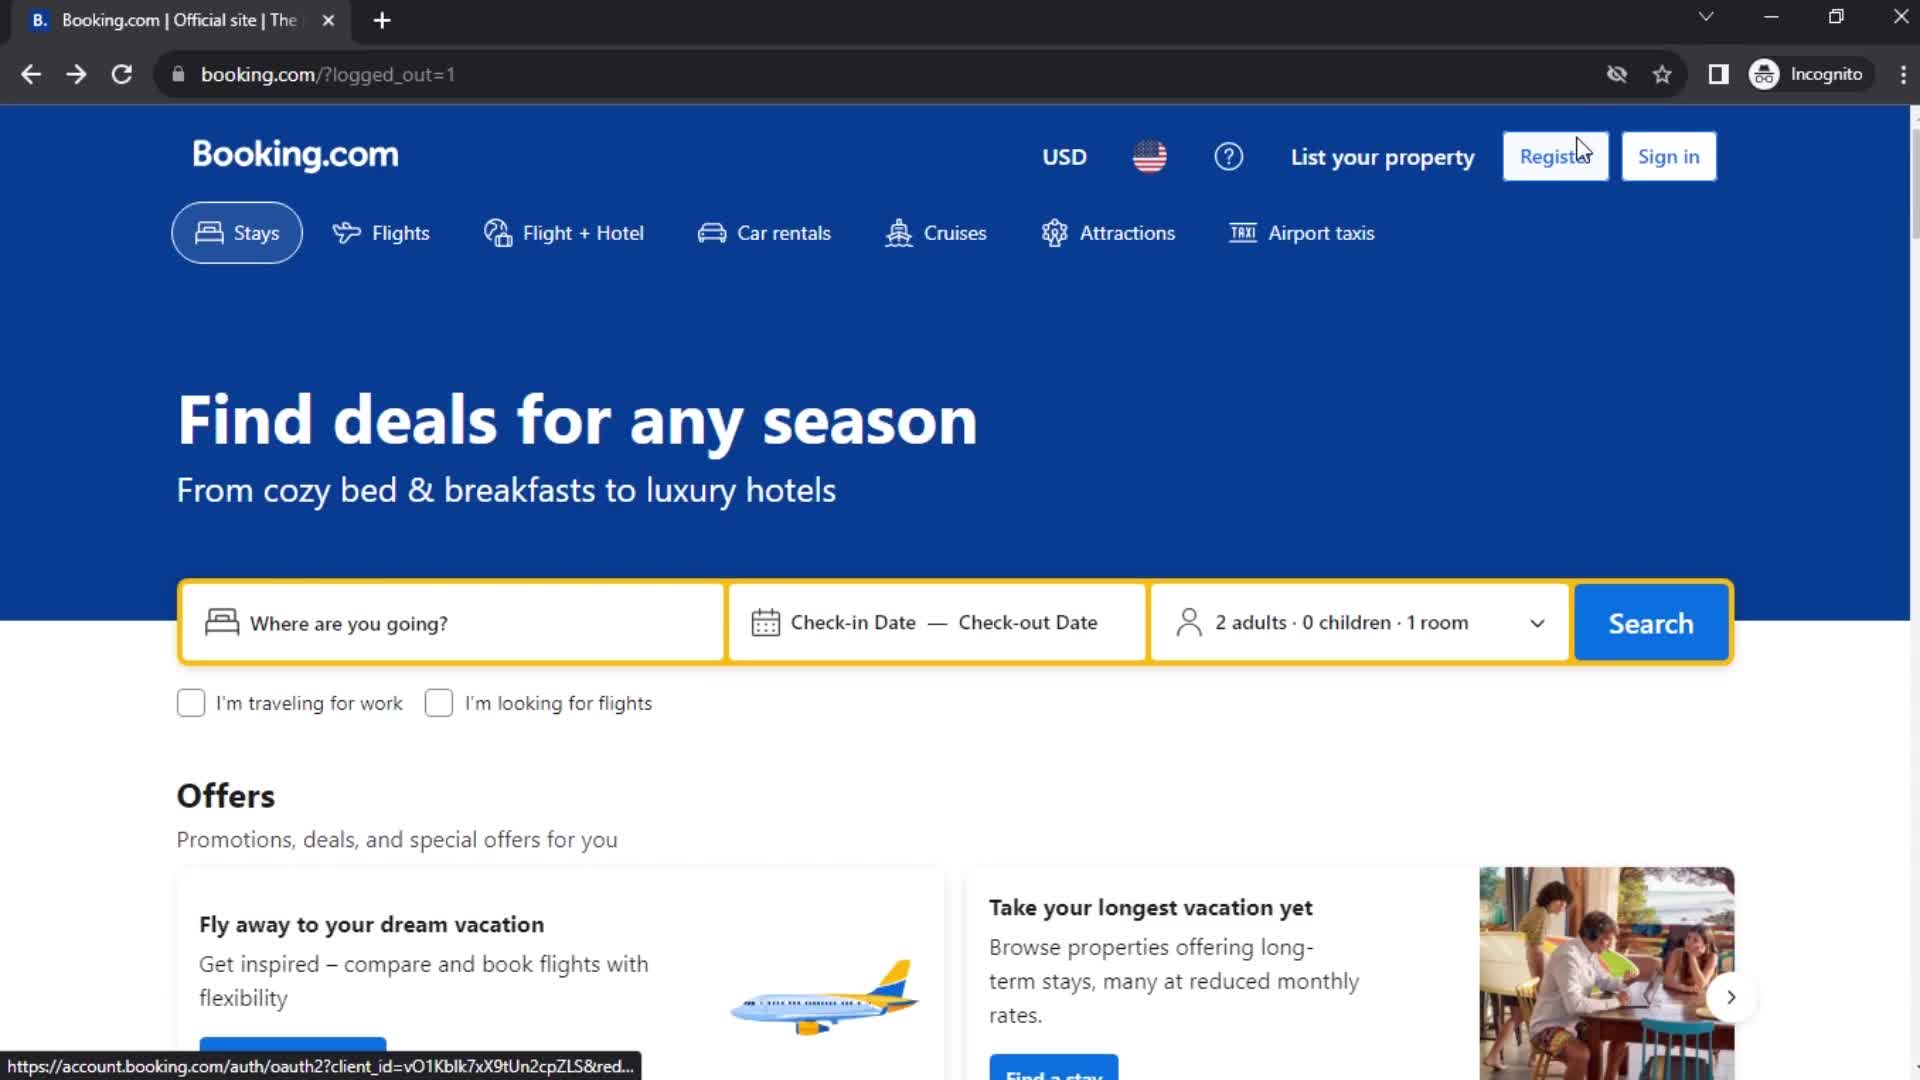 Booking.com homepage screenshot